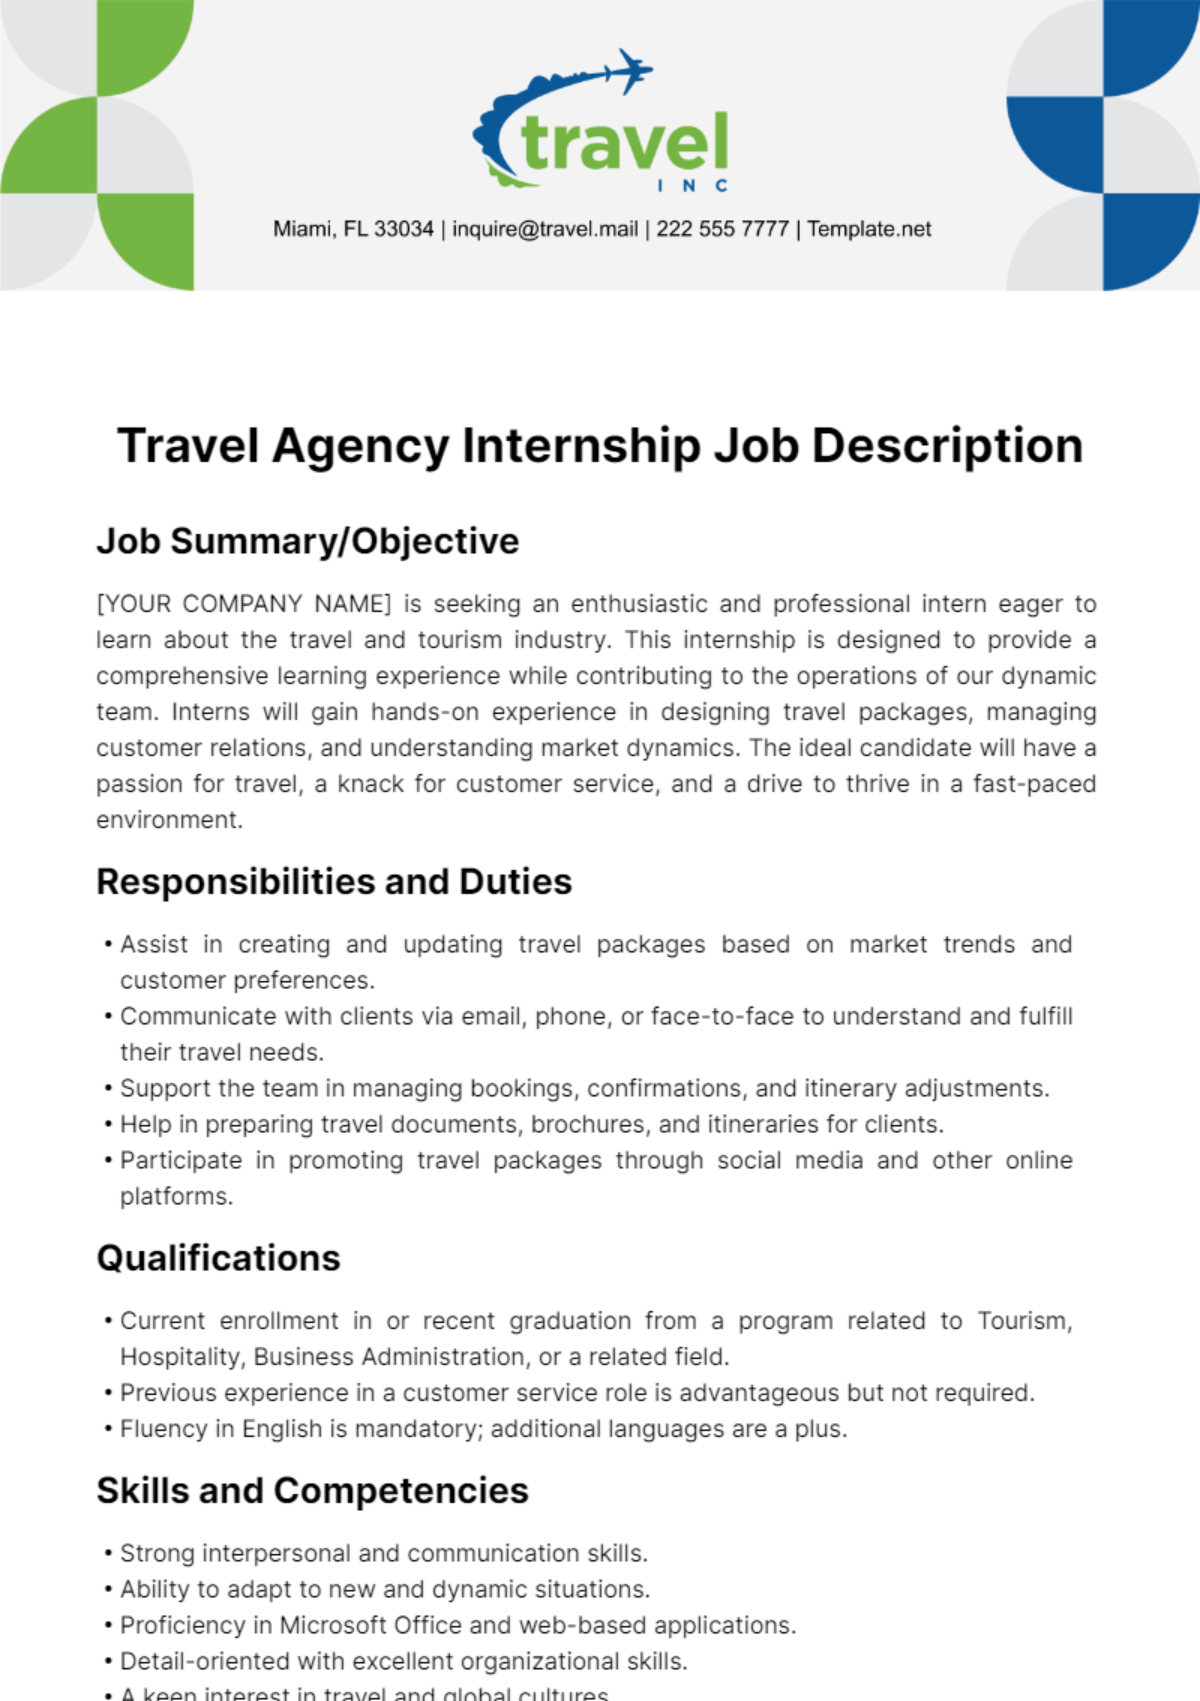 Free Travel Agency Internship Job Description Template